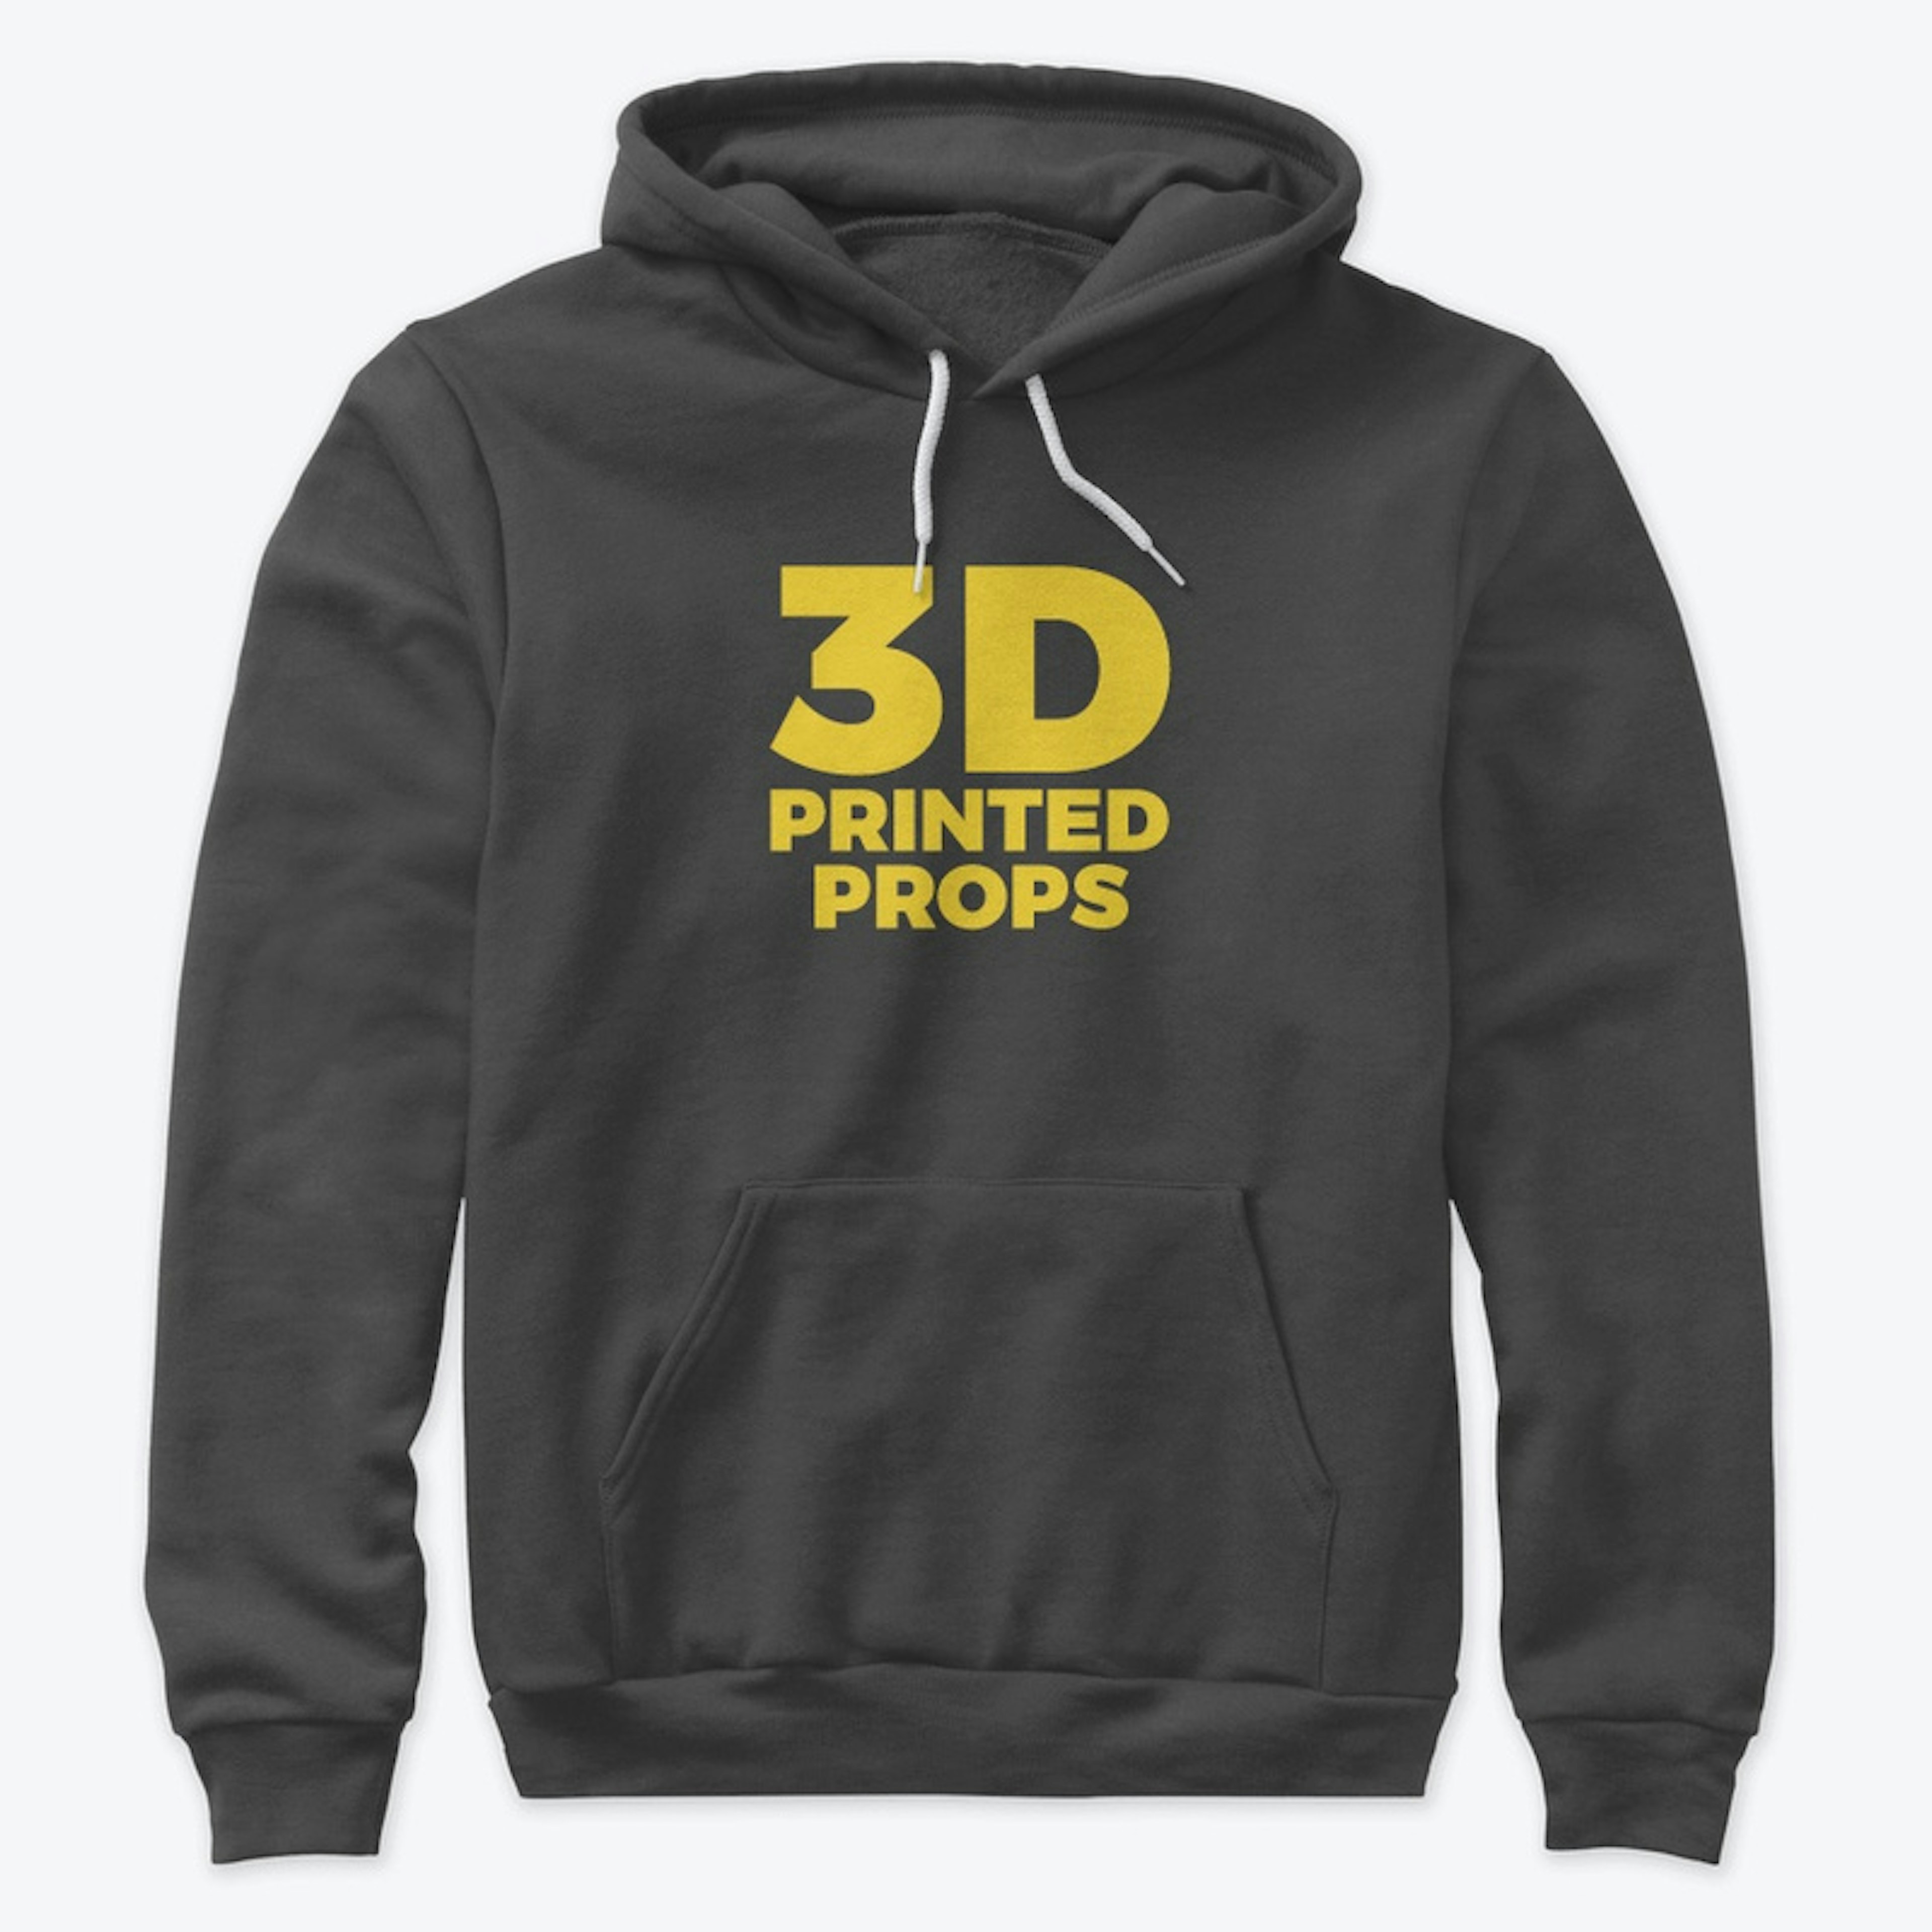 3D Printed Props